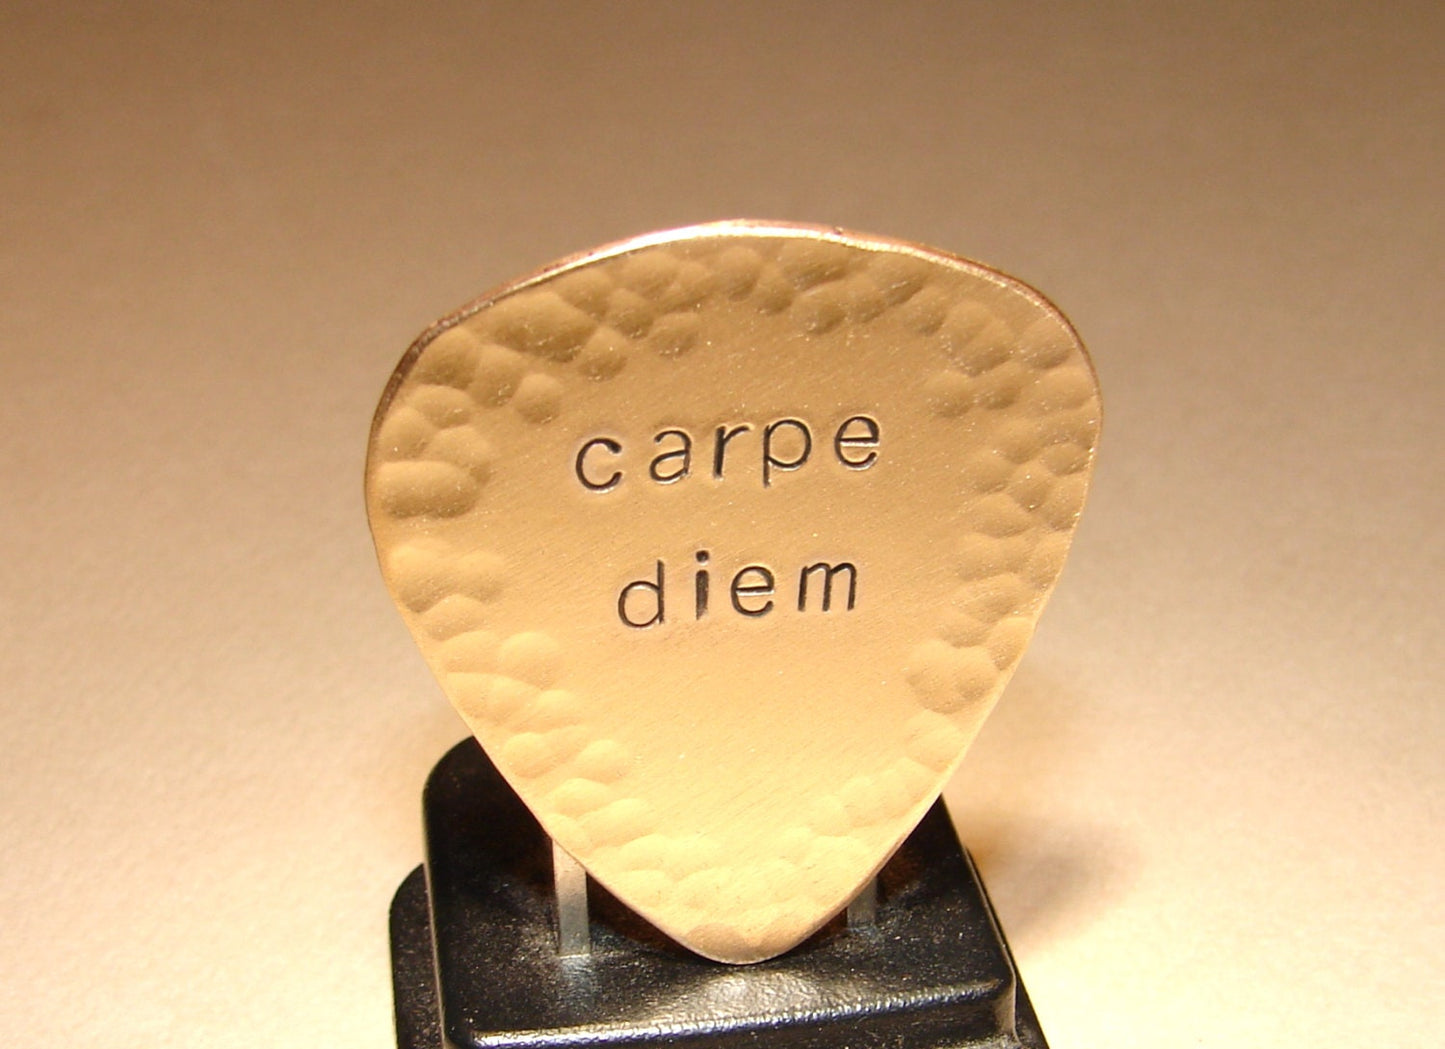 Carpe diem guitar pick with hammered edges in bronze